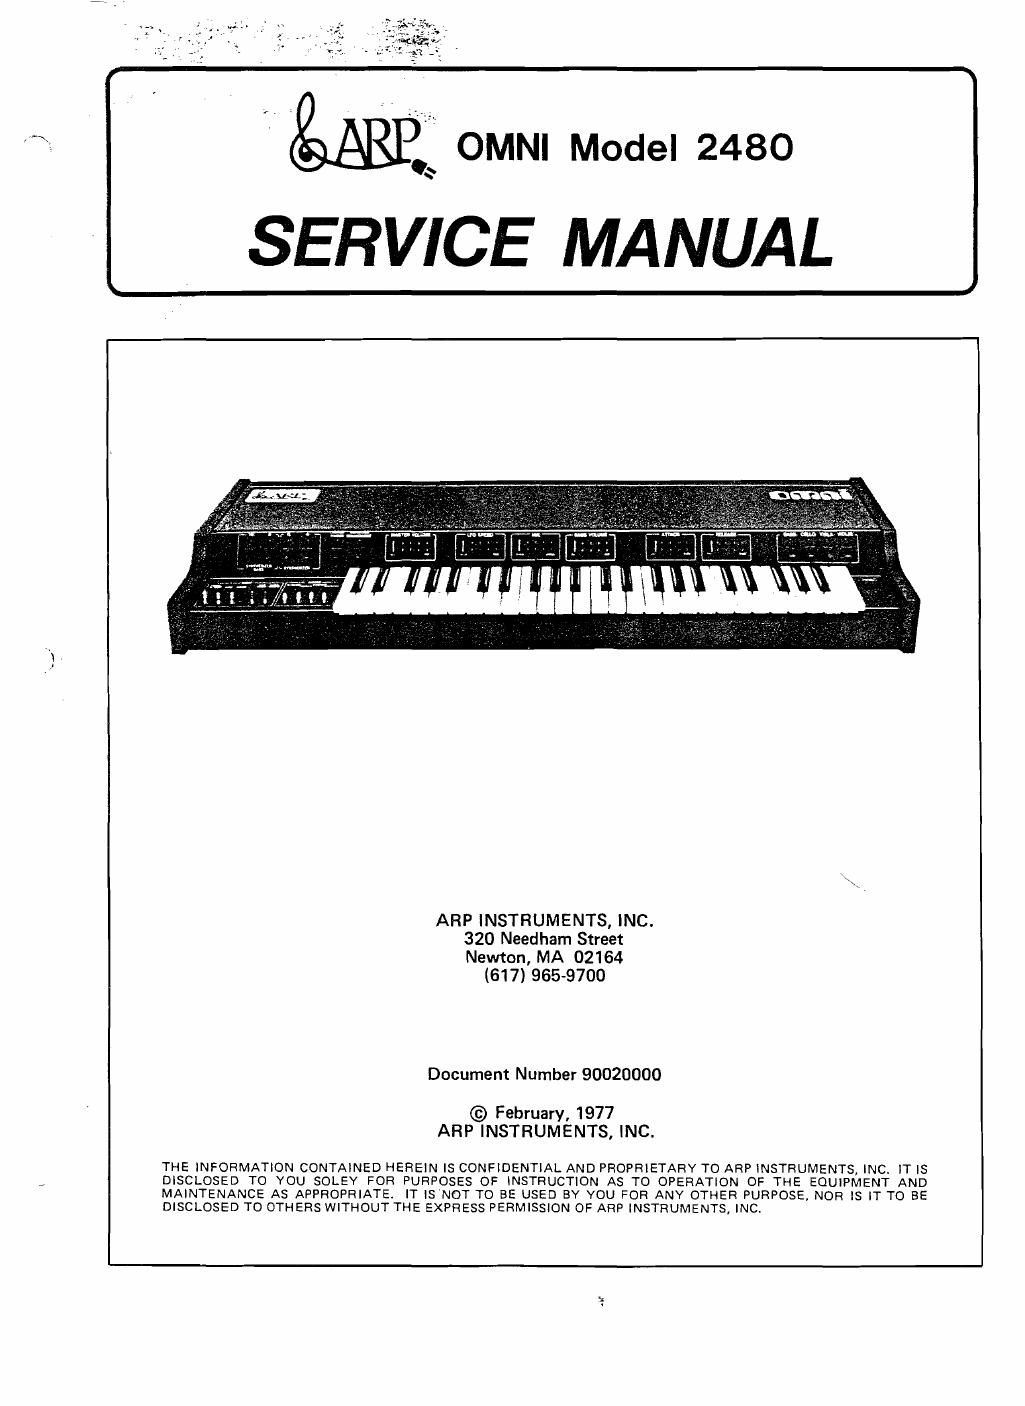 arp omni 2480 service manual